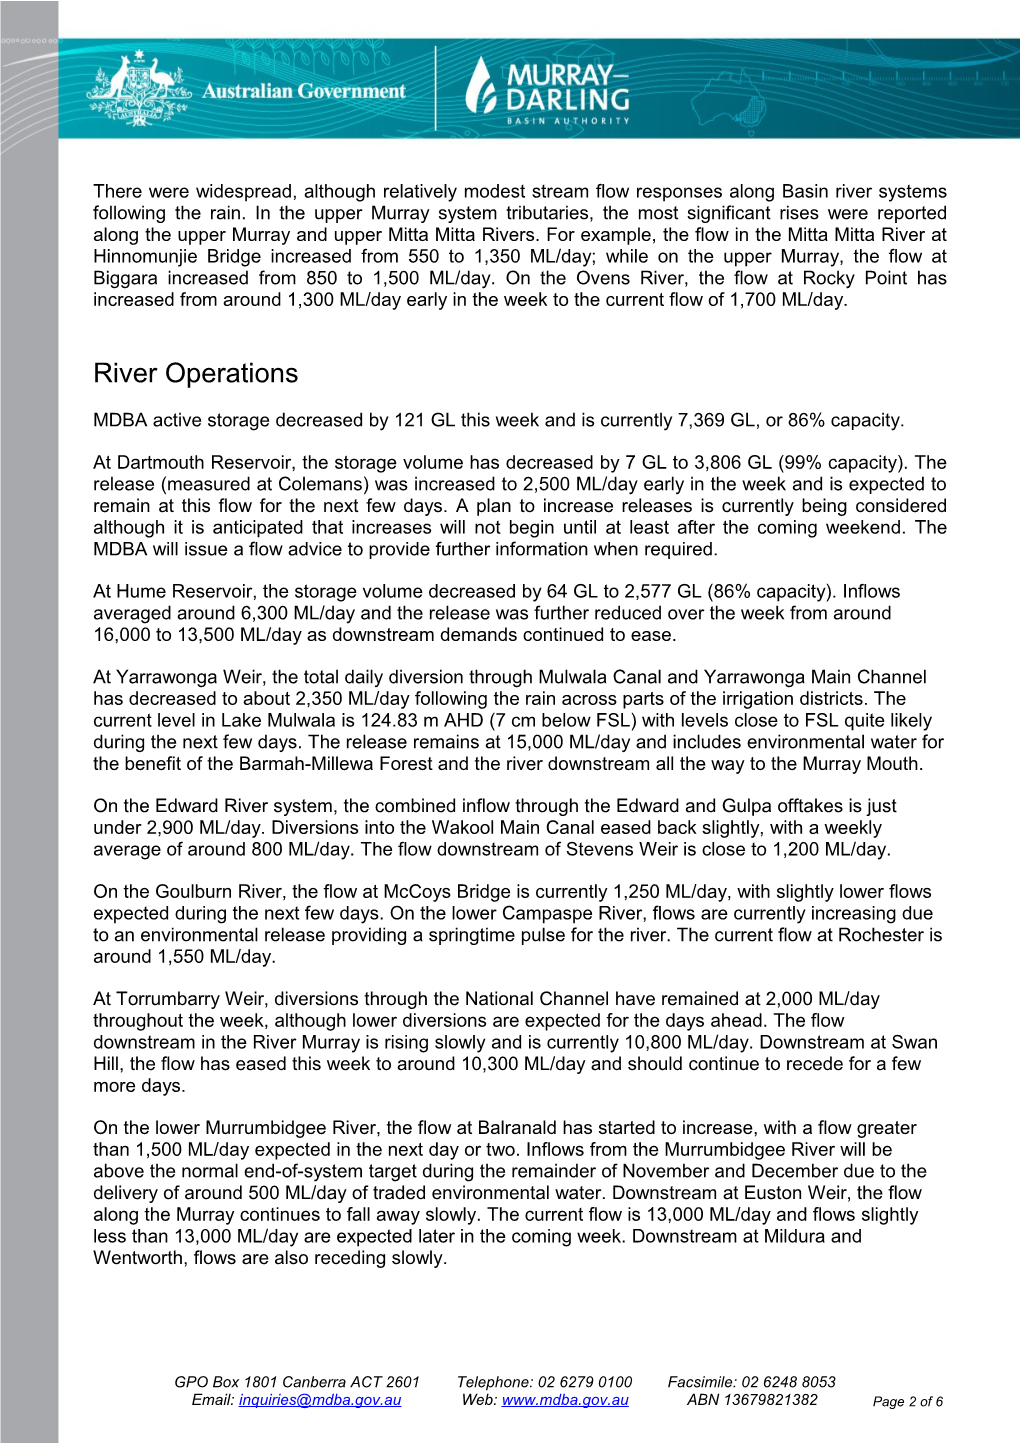 River Murray Operations Weekly Report 13 November 2013